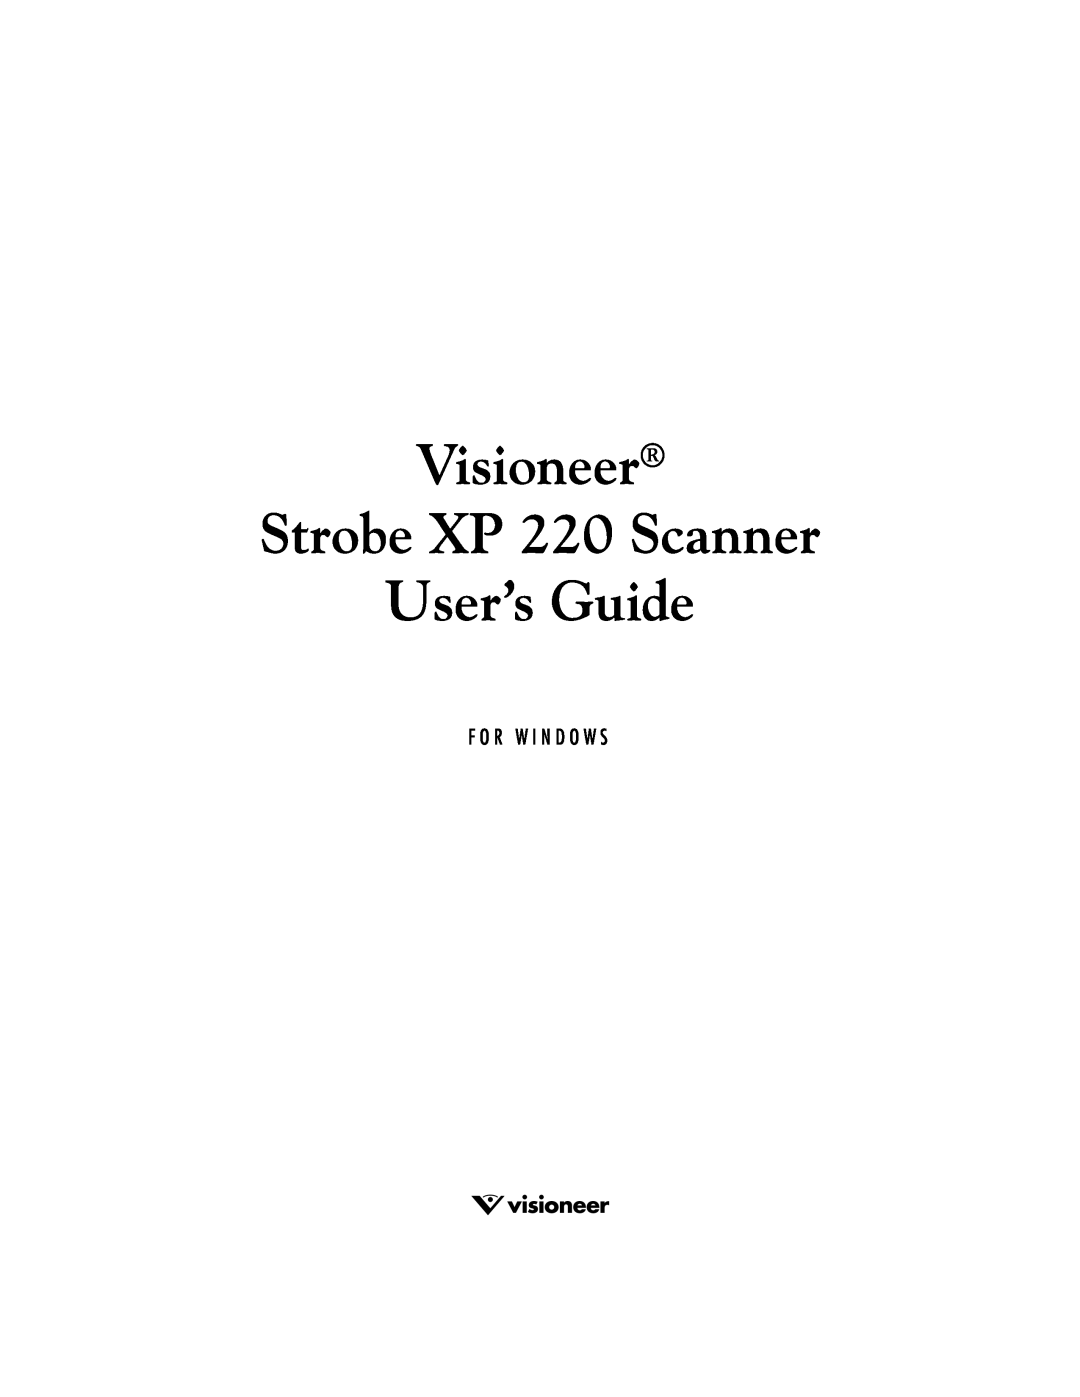 Visioneer XP220 manual Visioneer Strobe XP 220 Scanner User’s Guide, F O R W I N D O W S 